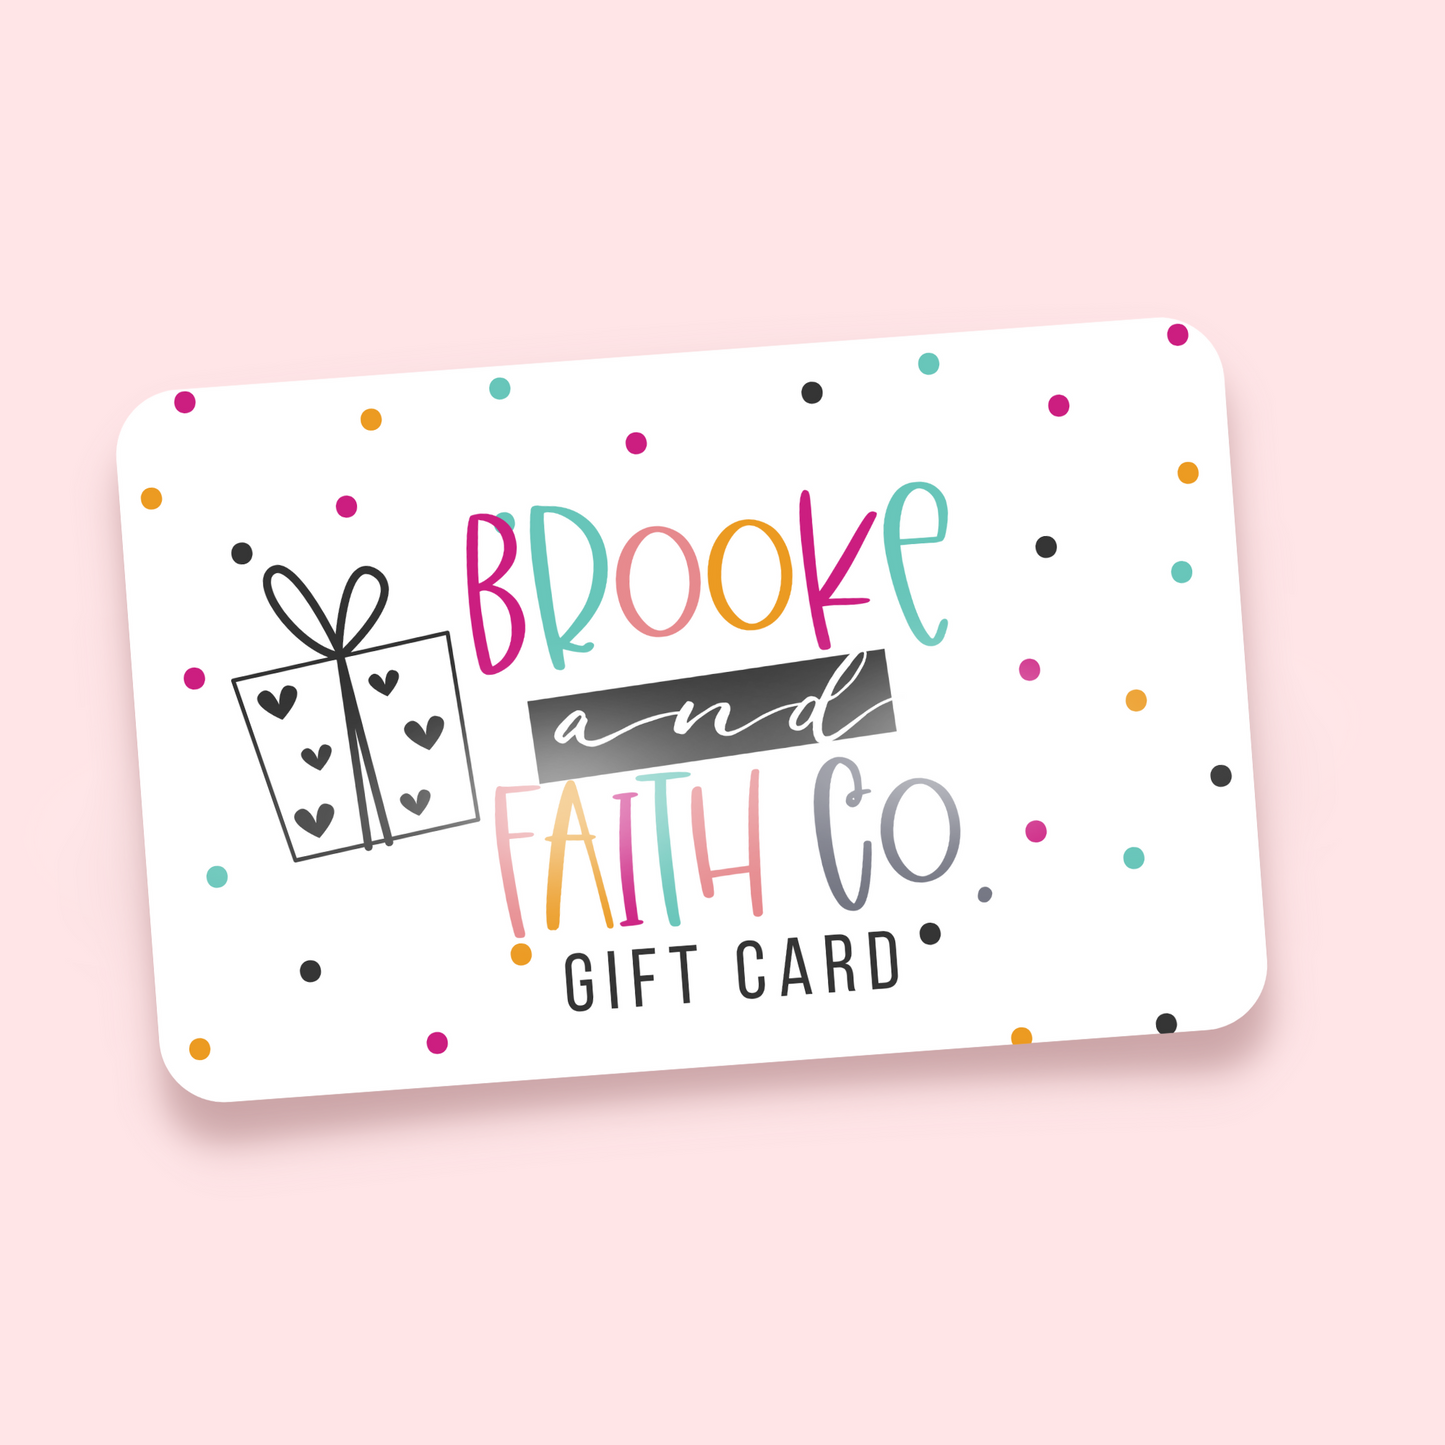 Brooke and Faith Co. Gift Card